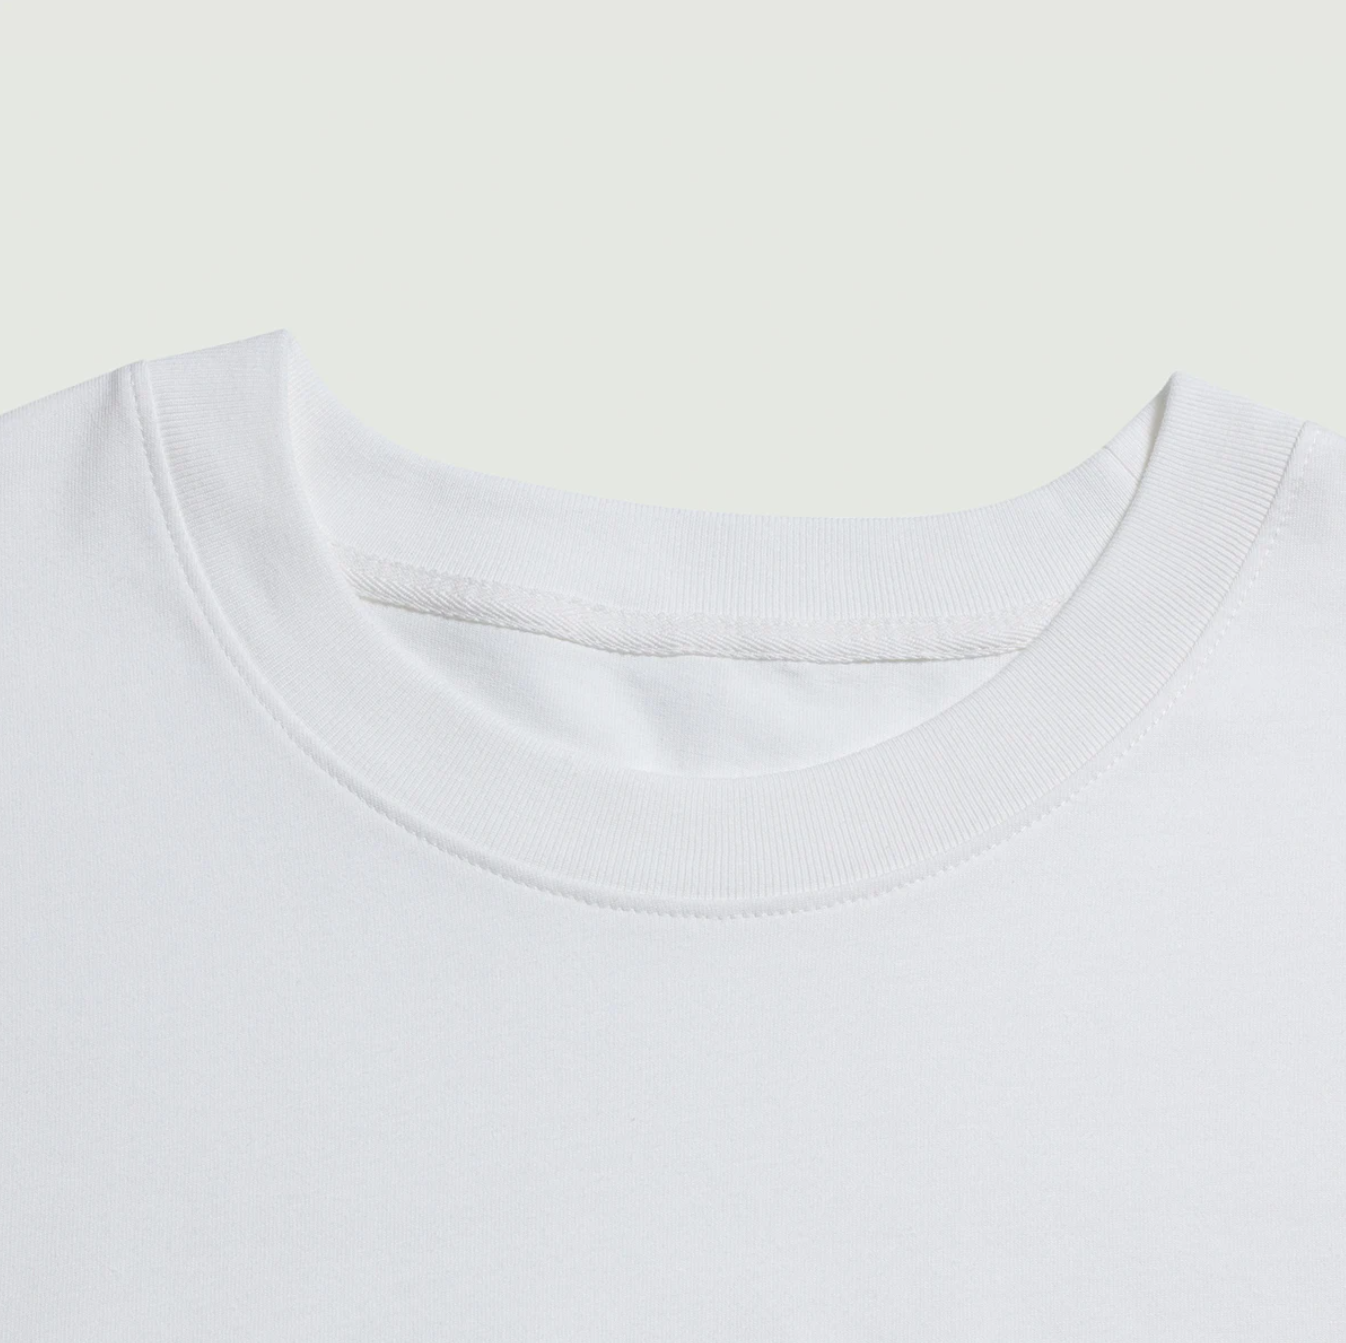 FIVE ELEMENTS (BACK PRINT) - Unisex Oversized T-shirt